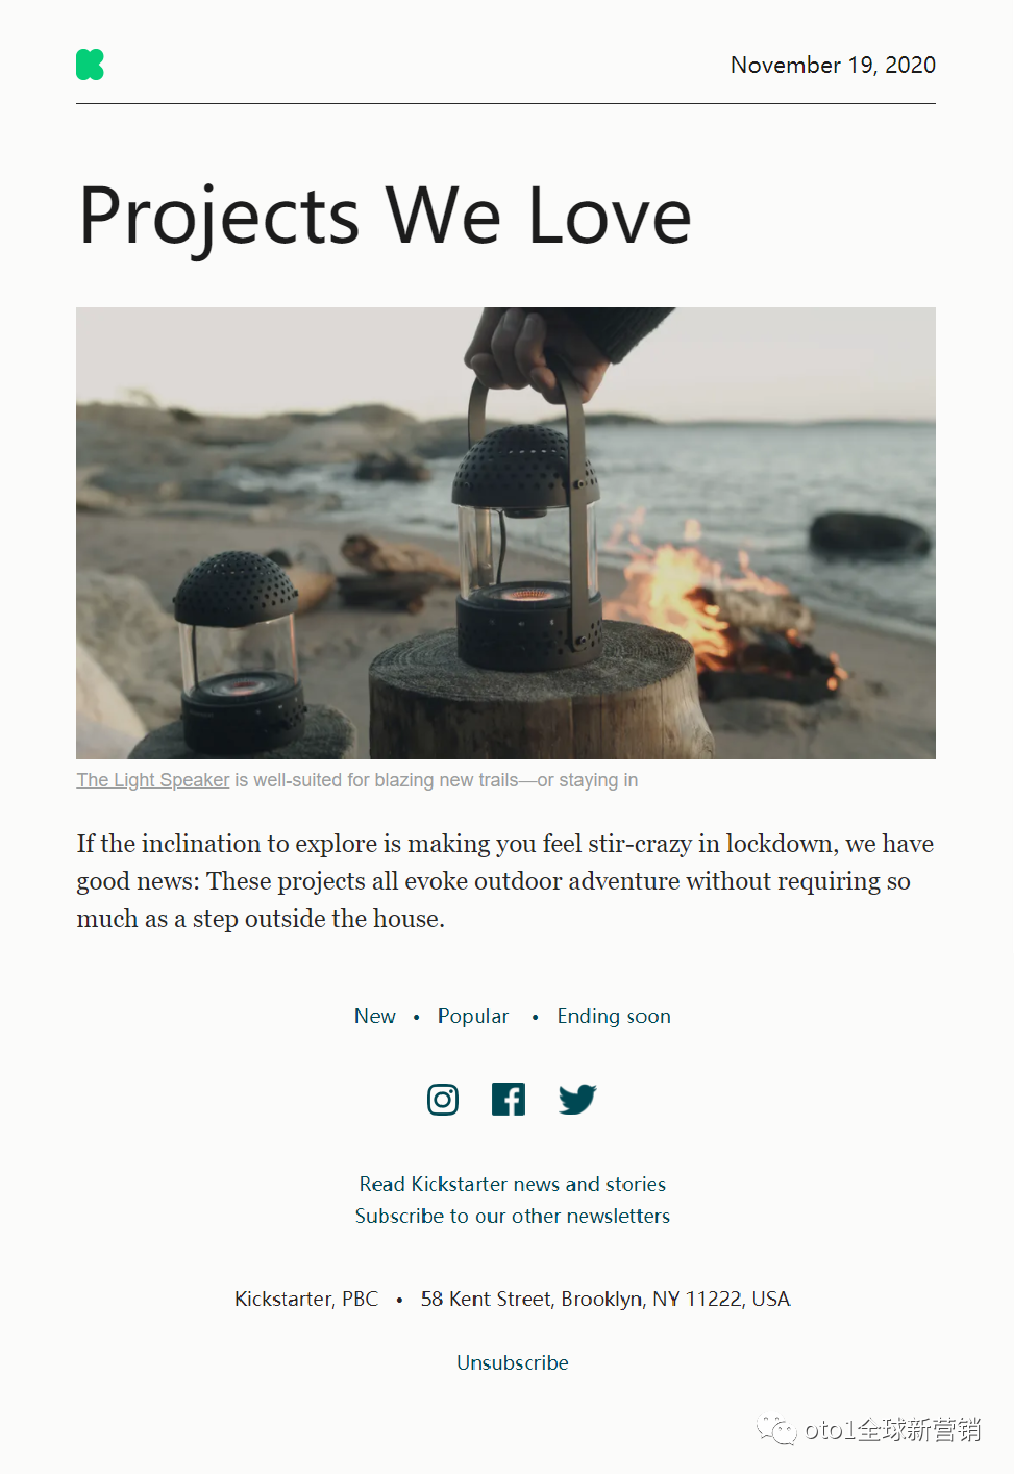 Kickstarter会给订阅projects we love的邮件用户推送你产品